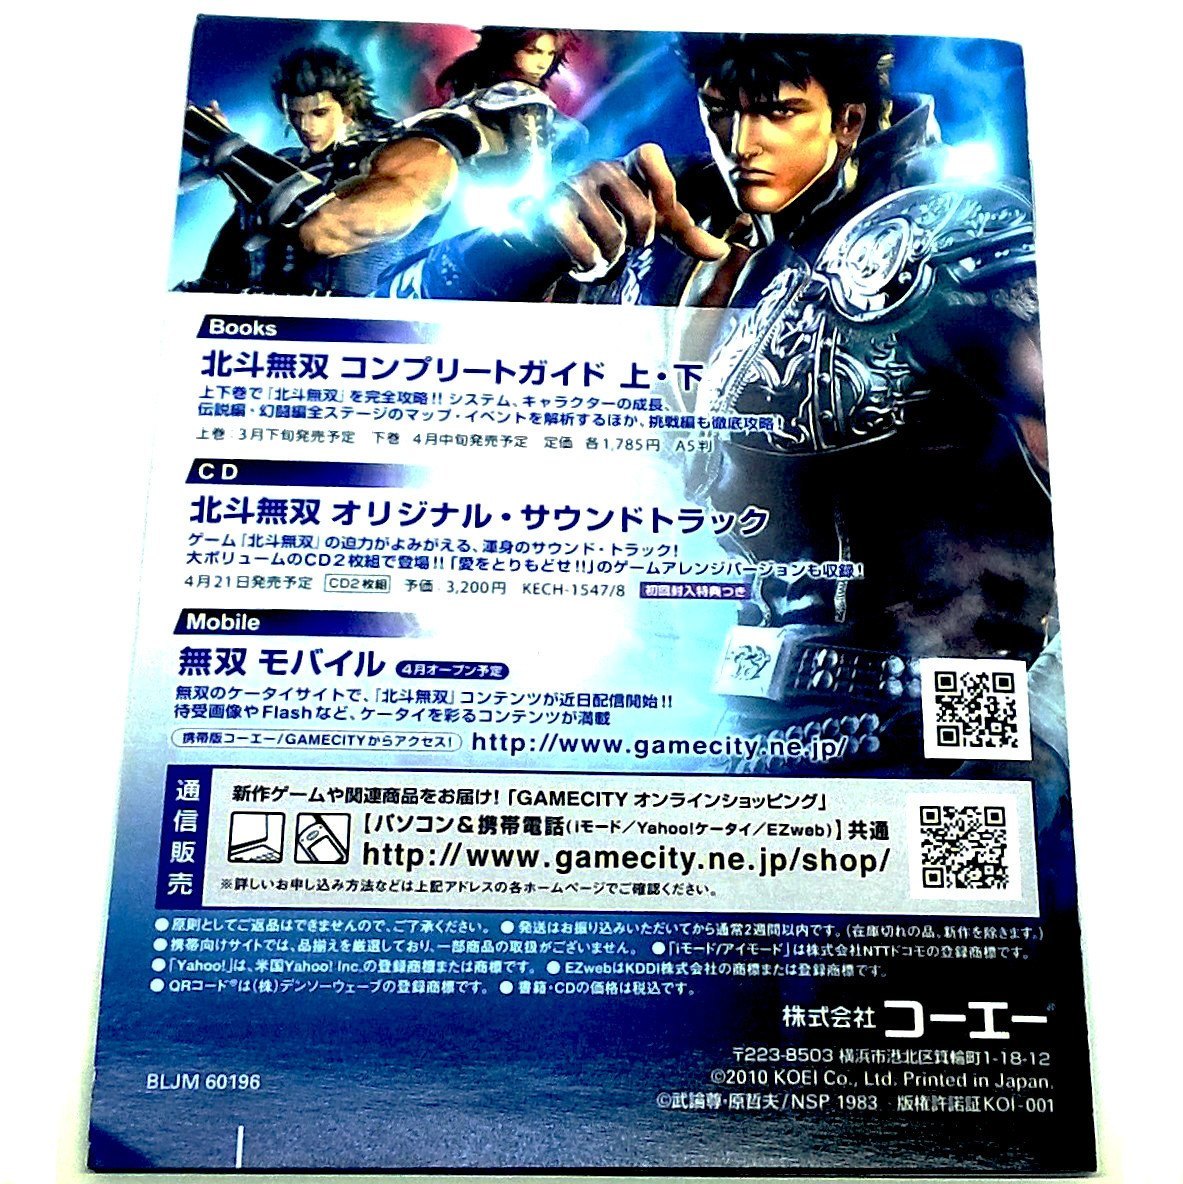 Hokuto Musou for PlayStation 3 (import) - Back of manual